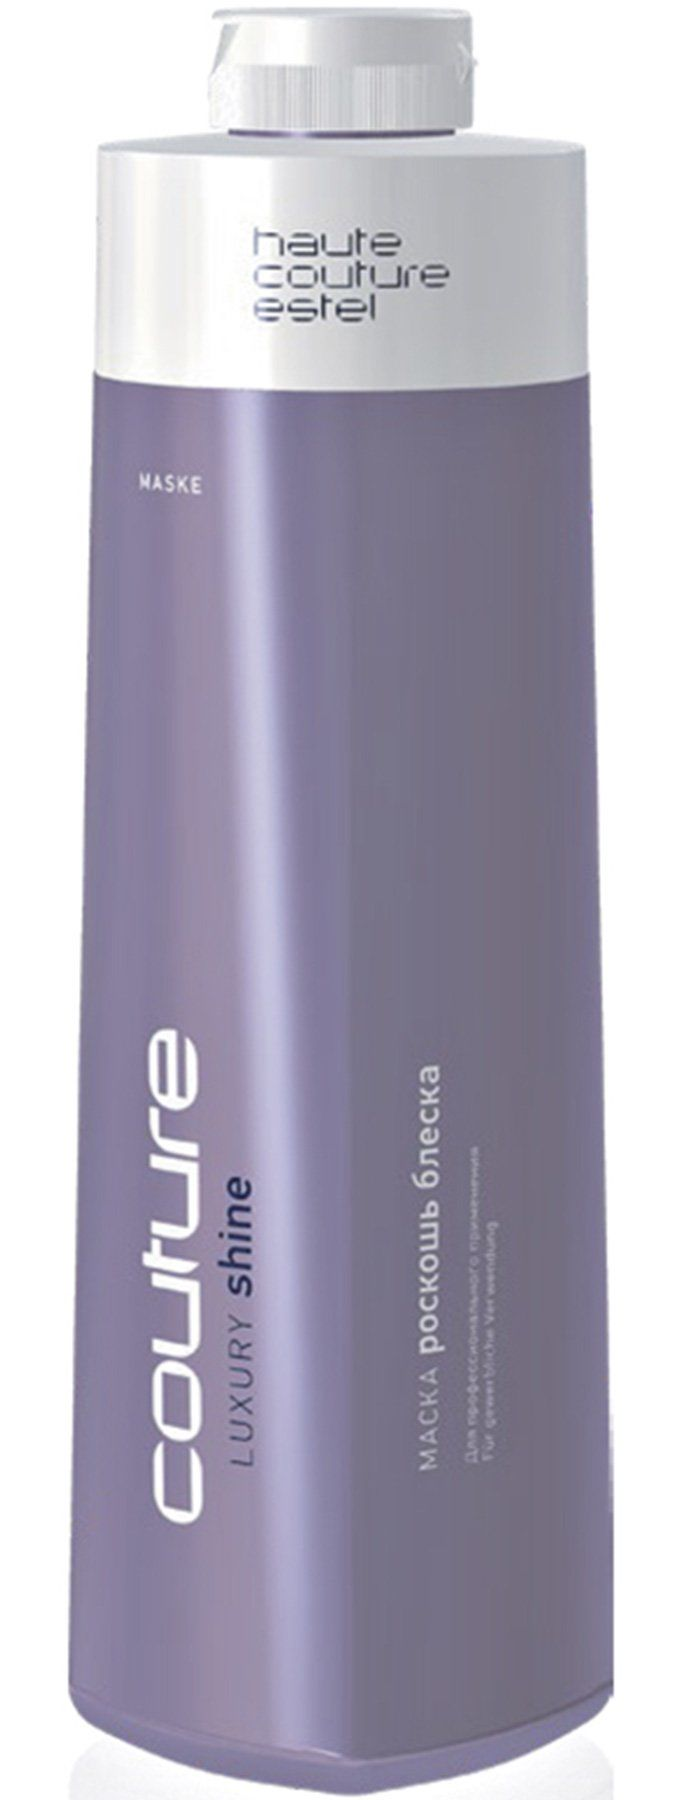 ESTEL HAUTE COUTURE Маска для волос / LUXURY SHINE 1000 мл LSM/1000 - фото 1